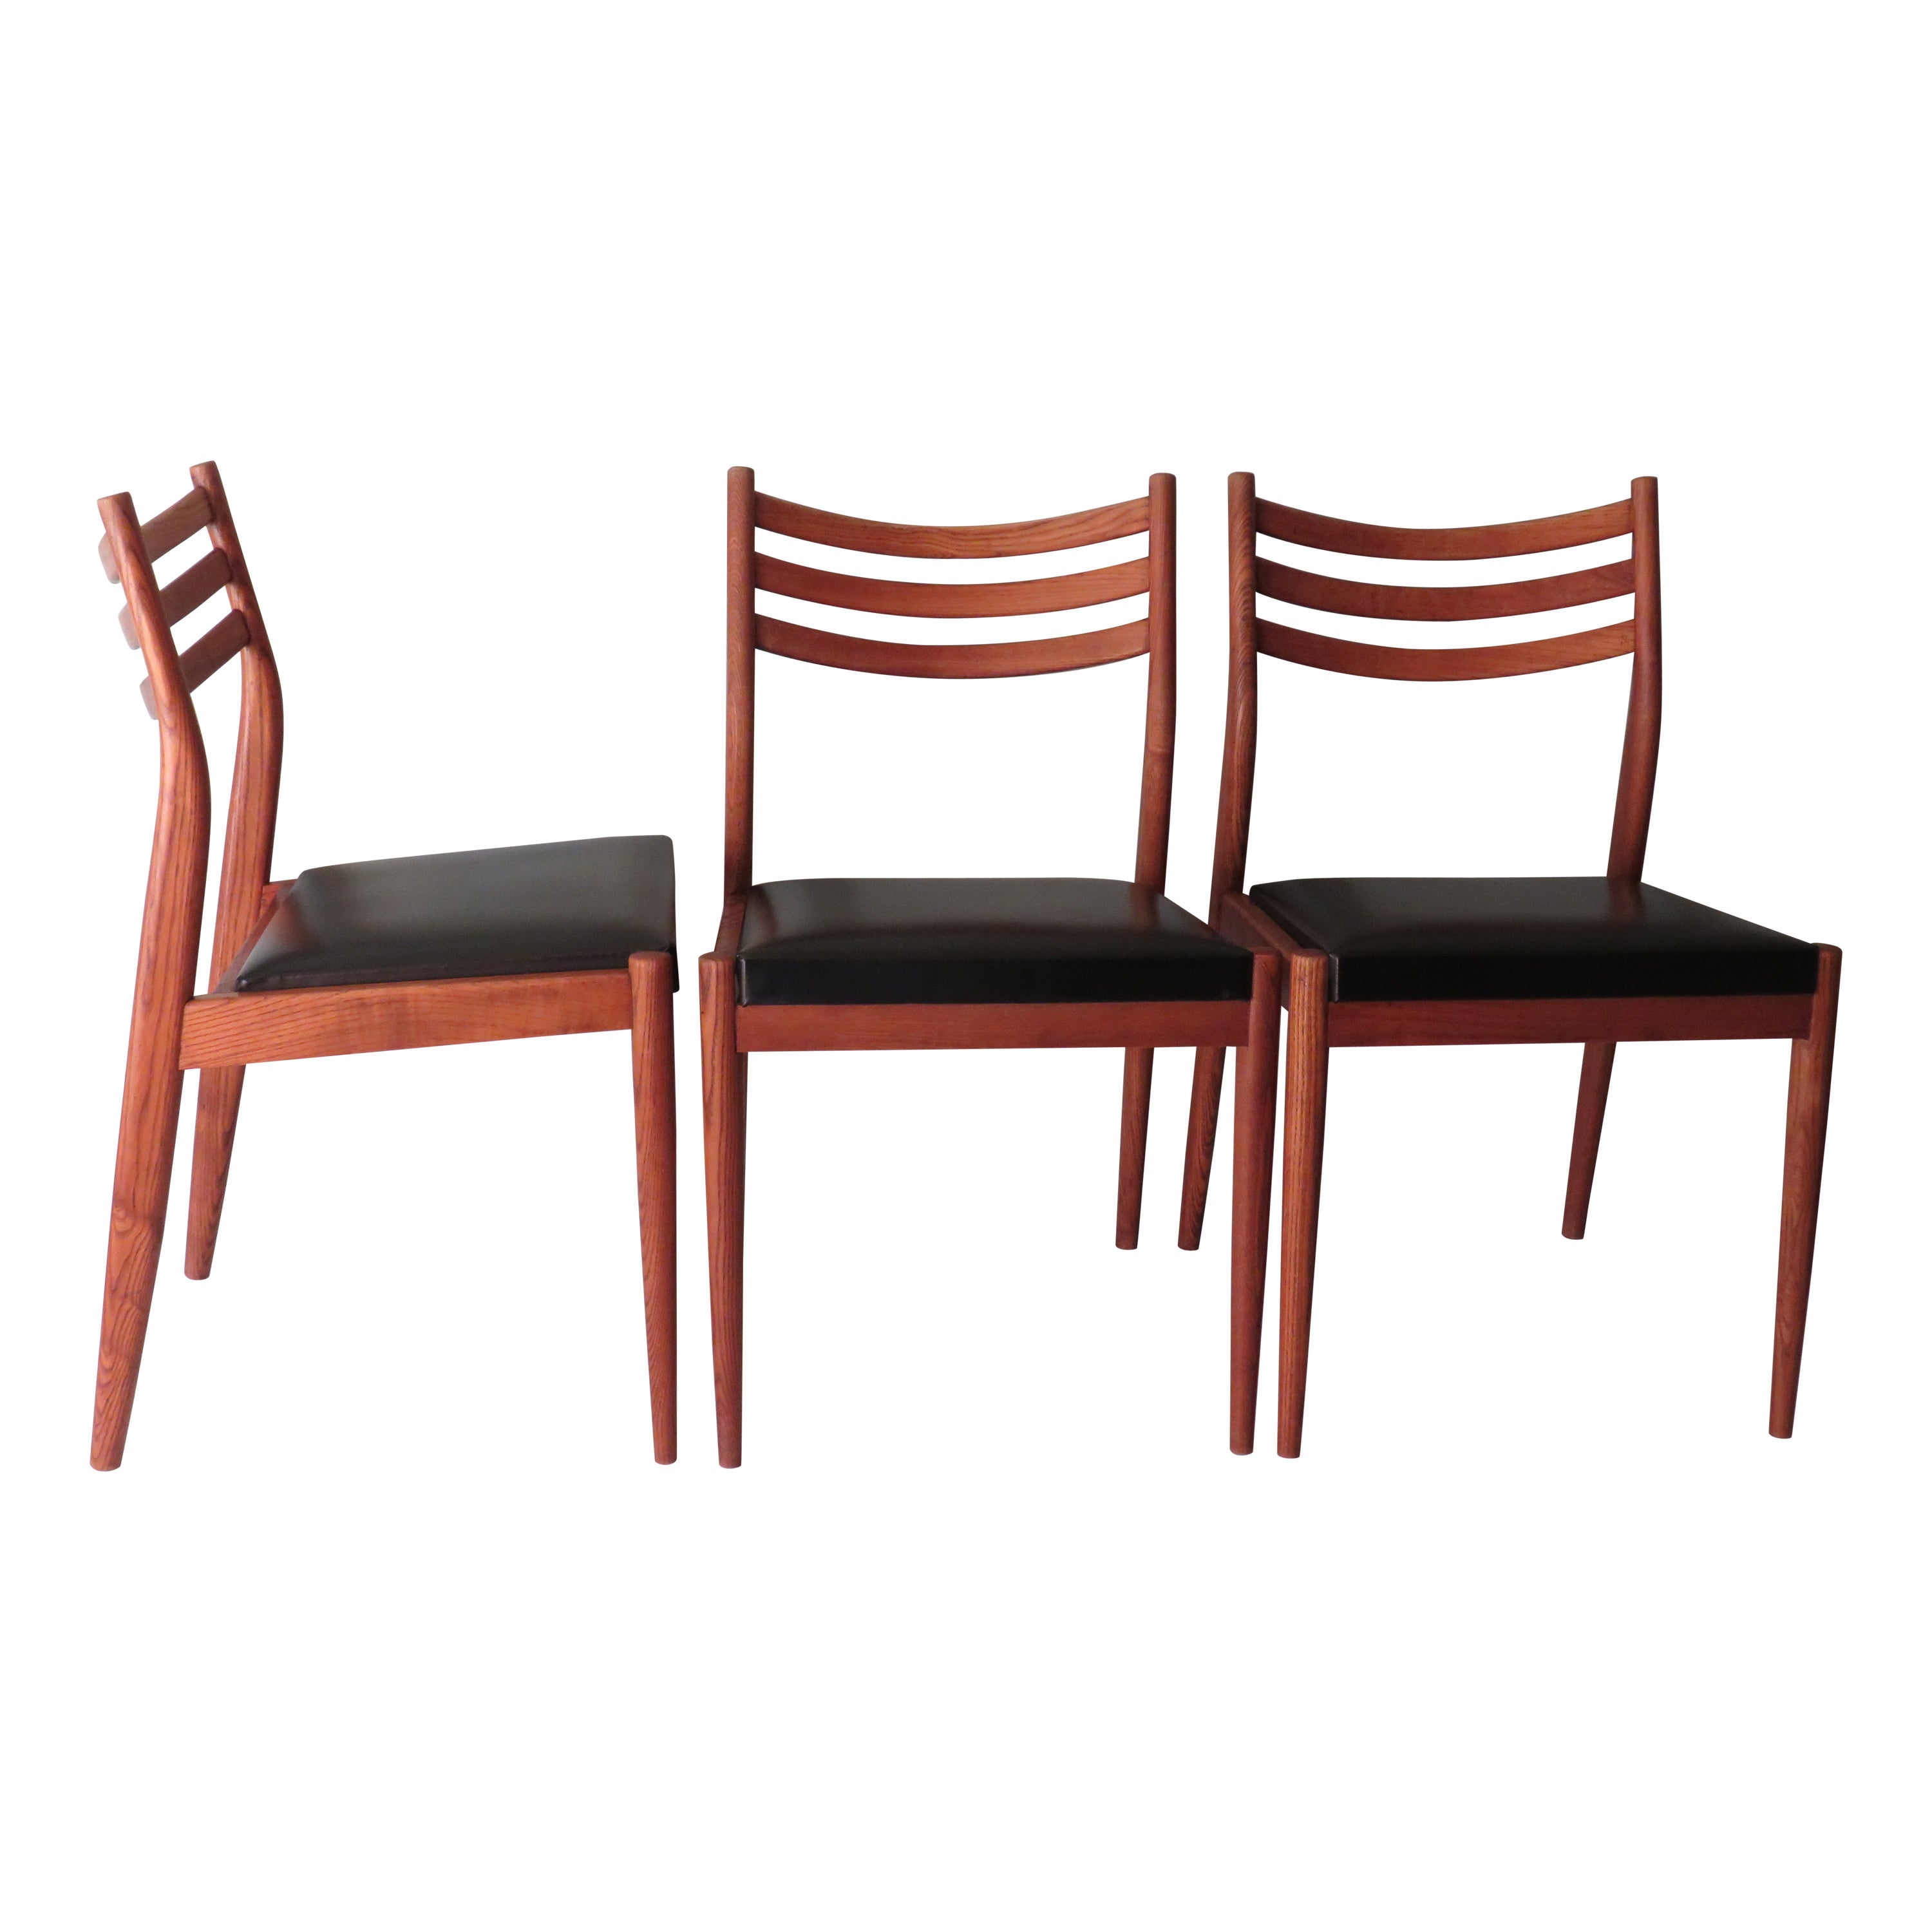 Set of 3 Teak Dining Room Chairs, Danish Design 1960-1970